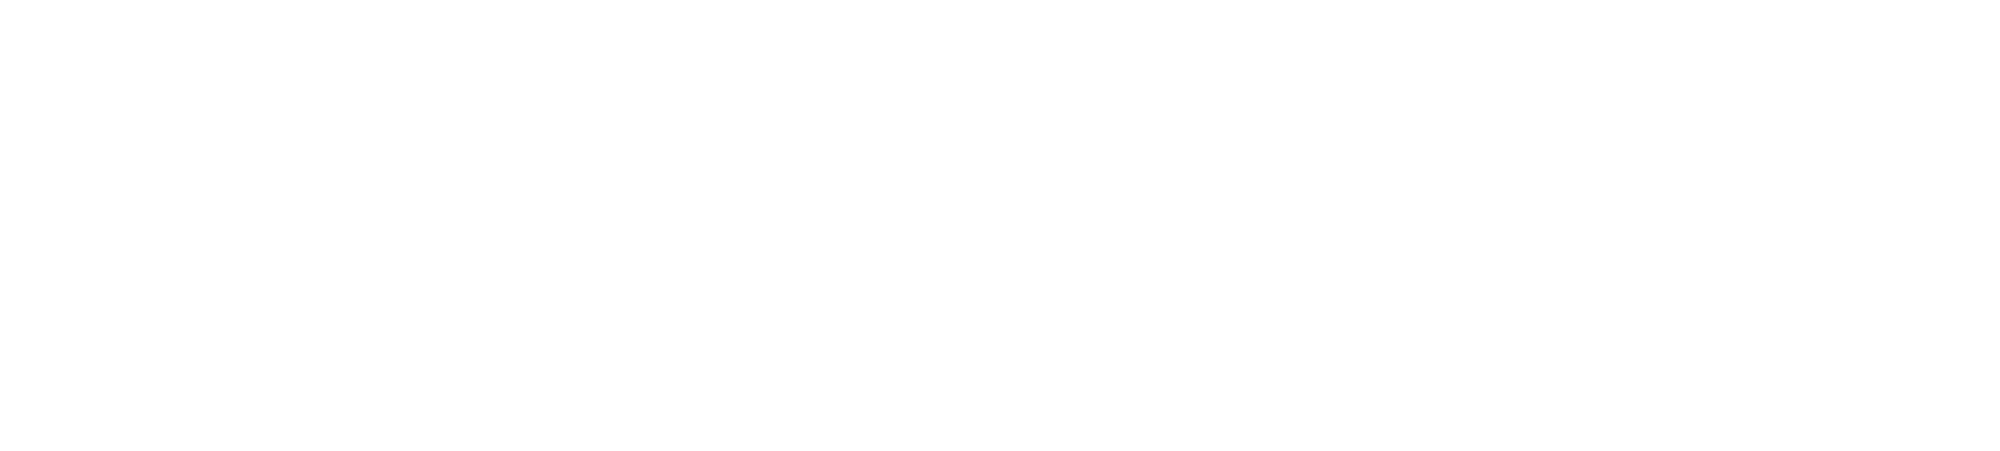 Jobs and Skills Exchange